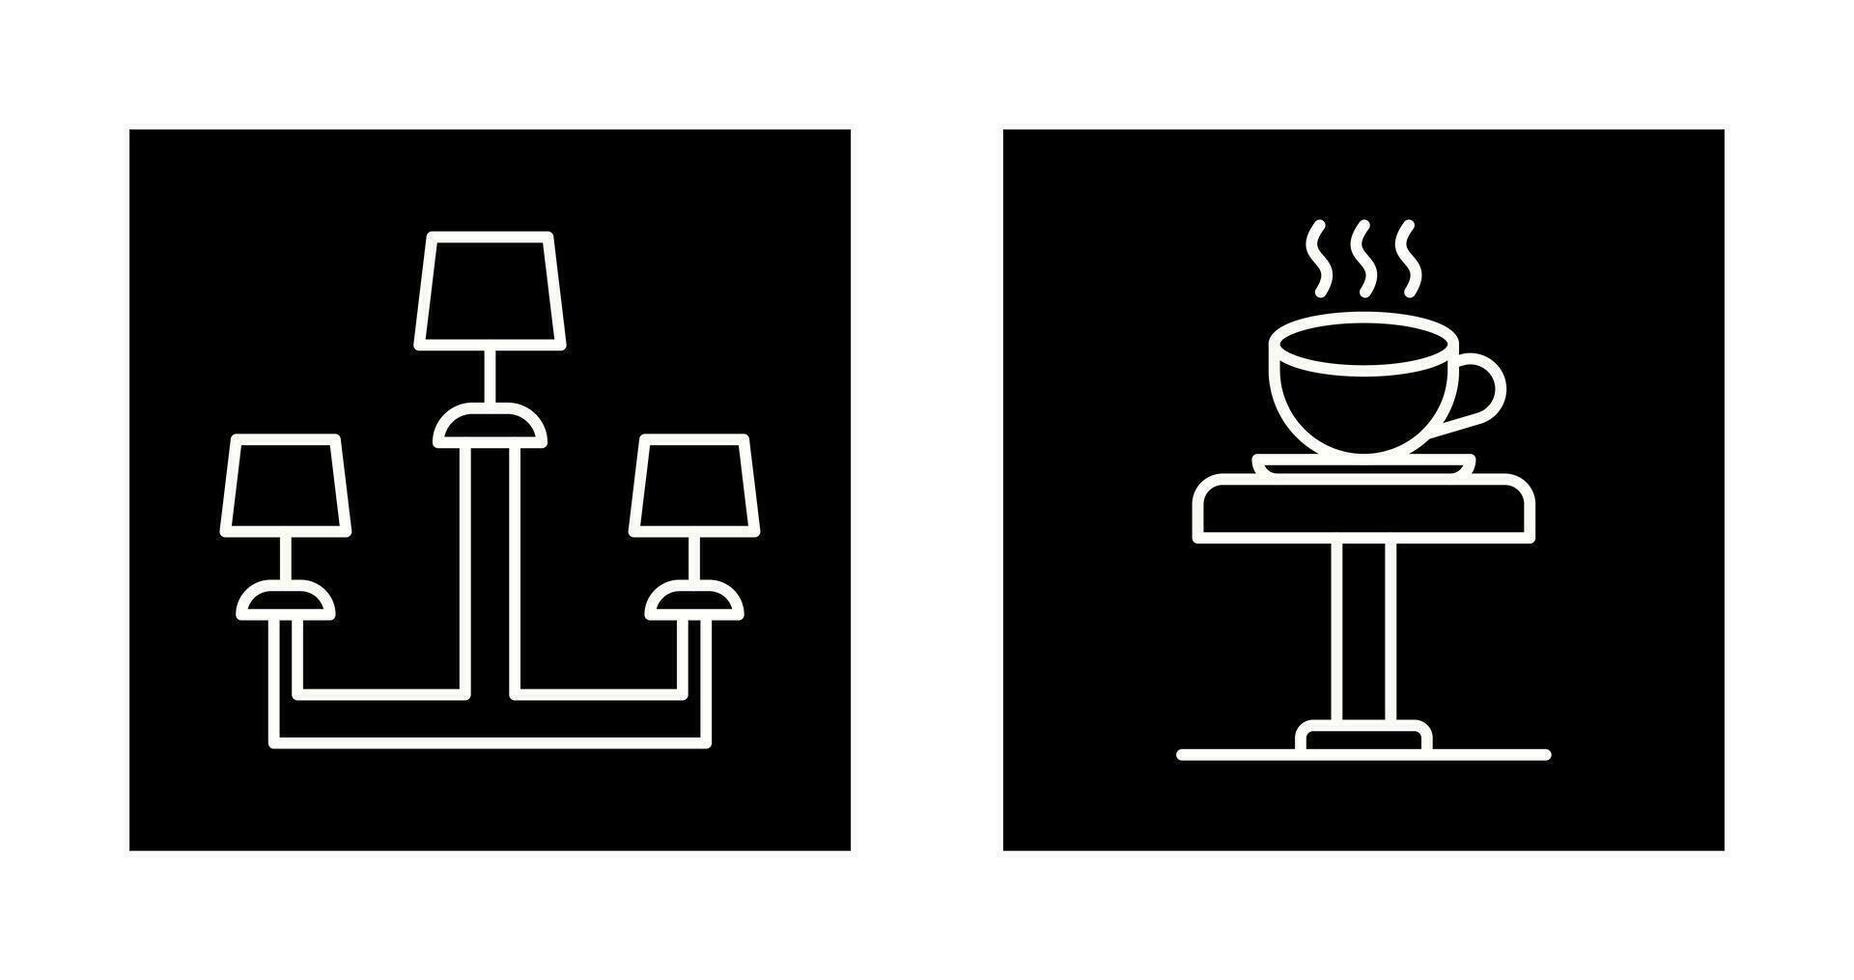 Lampe und Kaffee Tabelle Symbol vektor